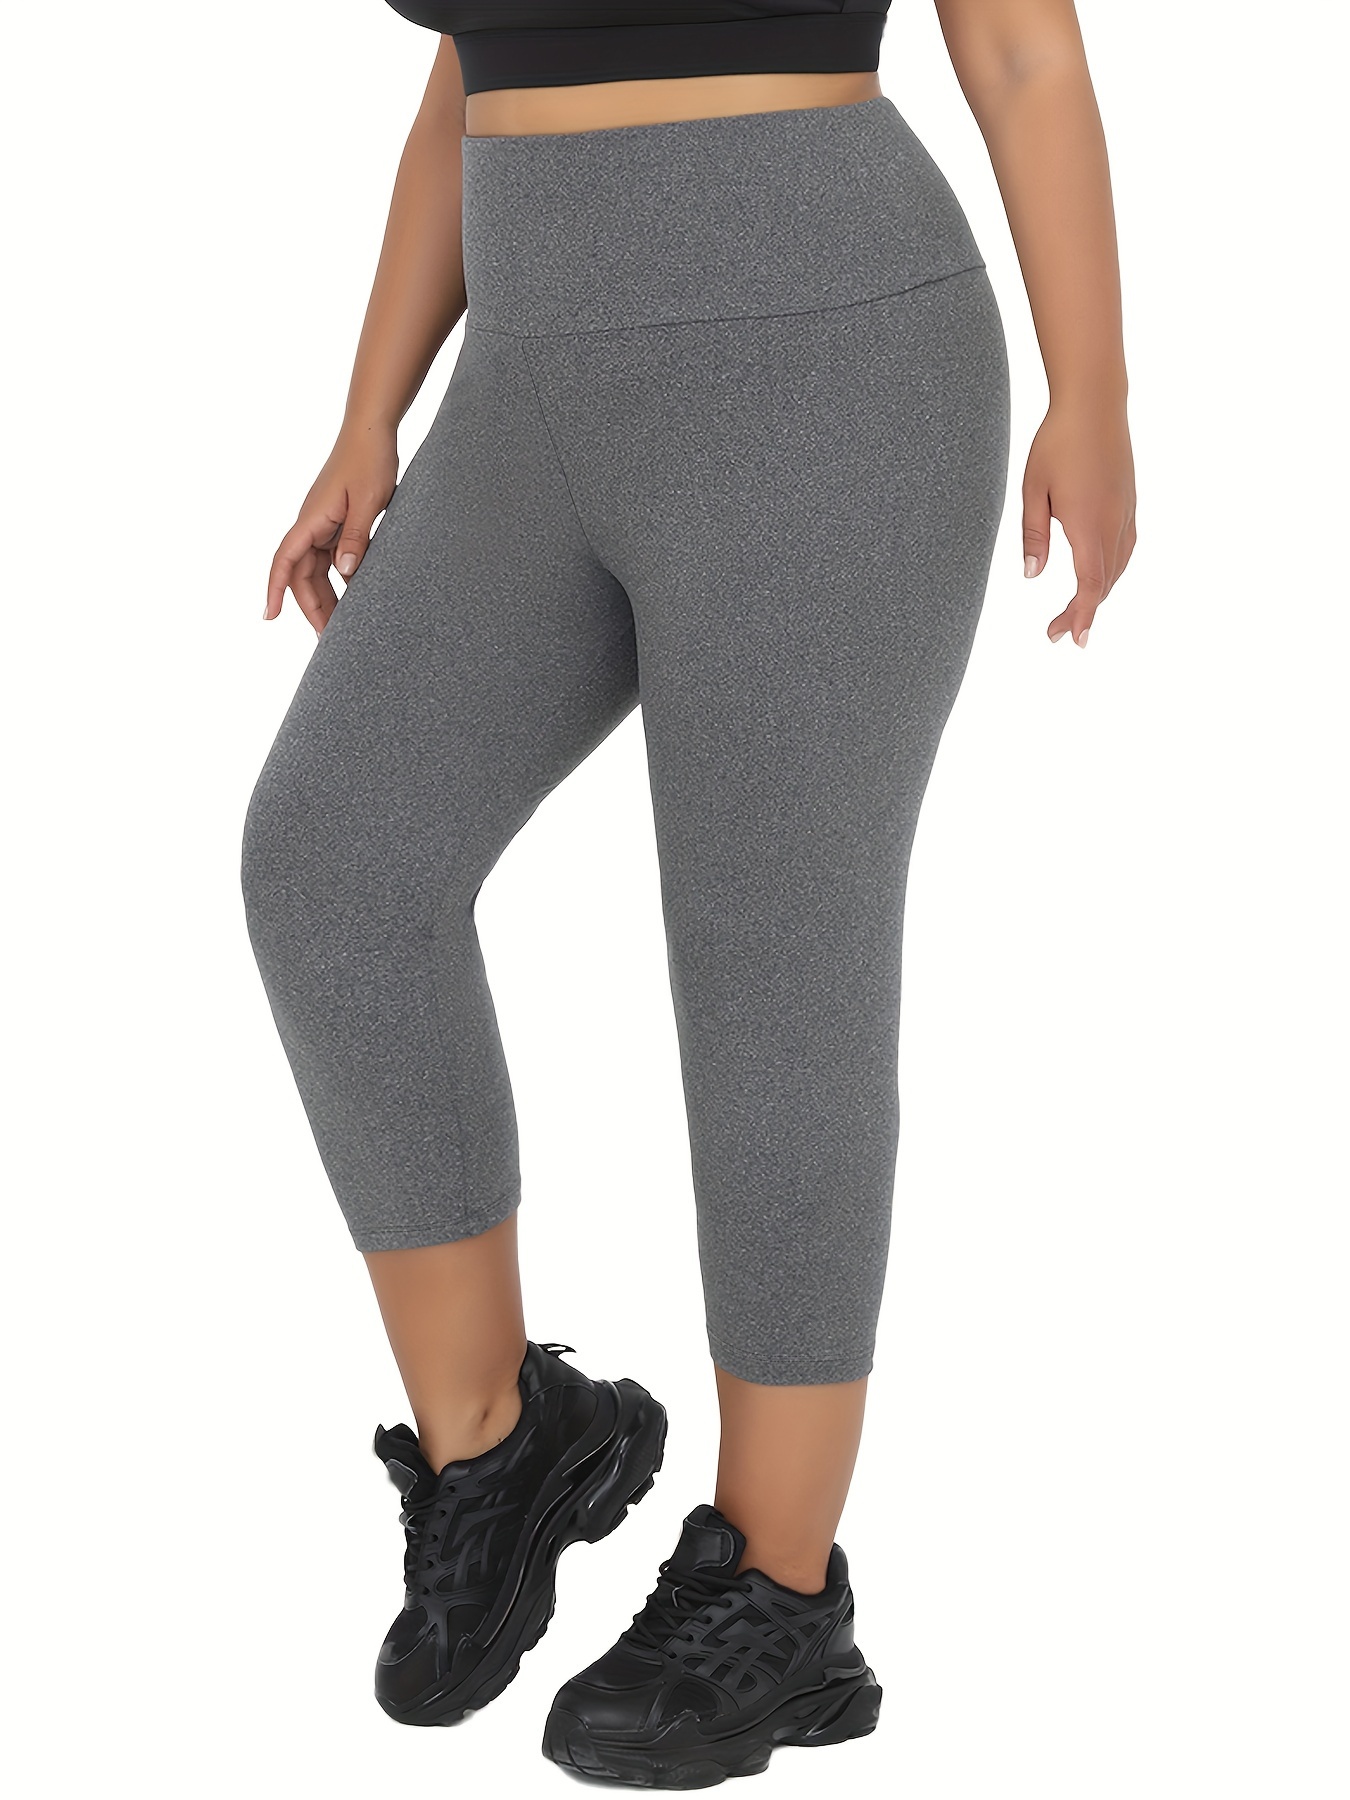 Buy BEING RUNNER Women's Plain Skinny Fit Yoga Pants with Phone